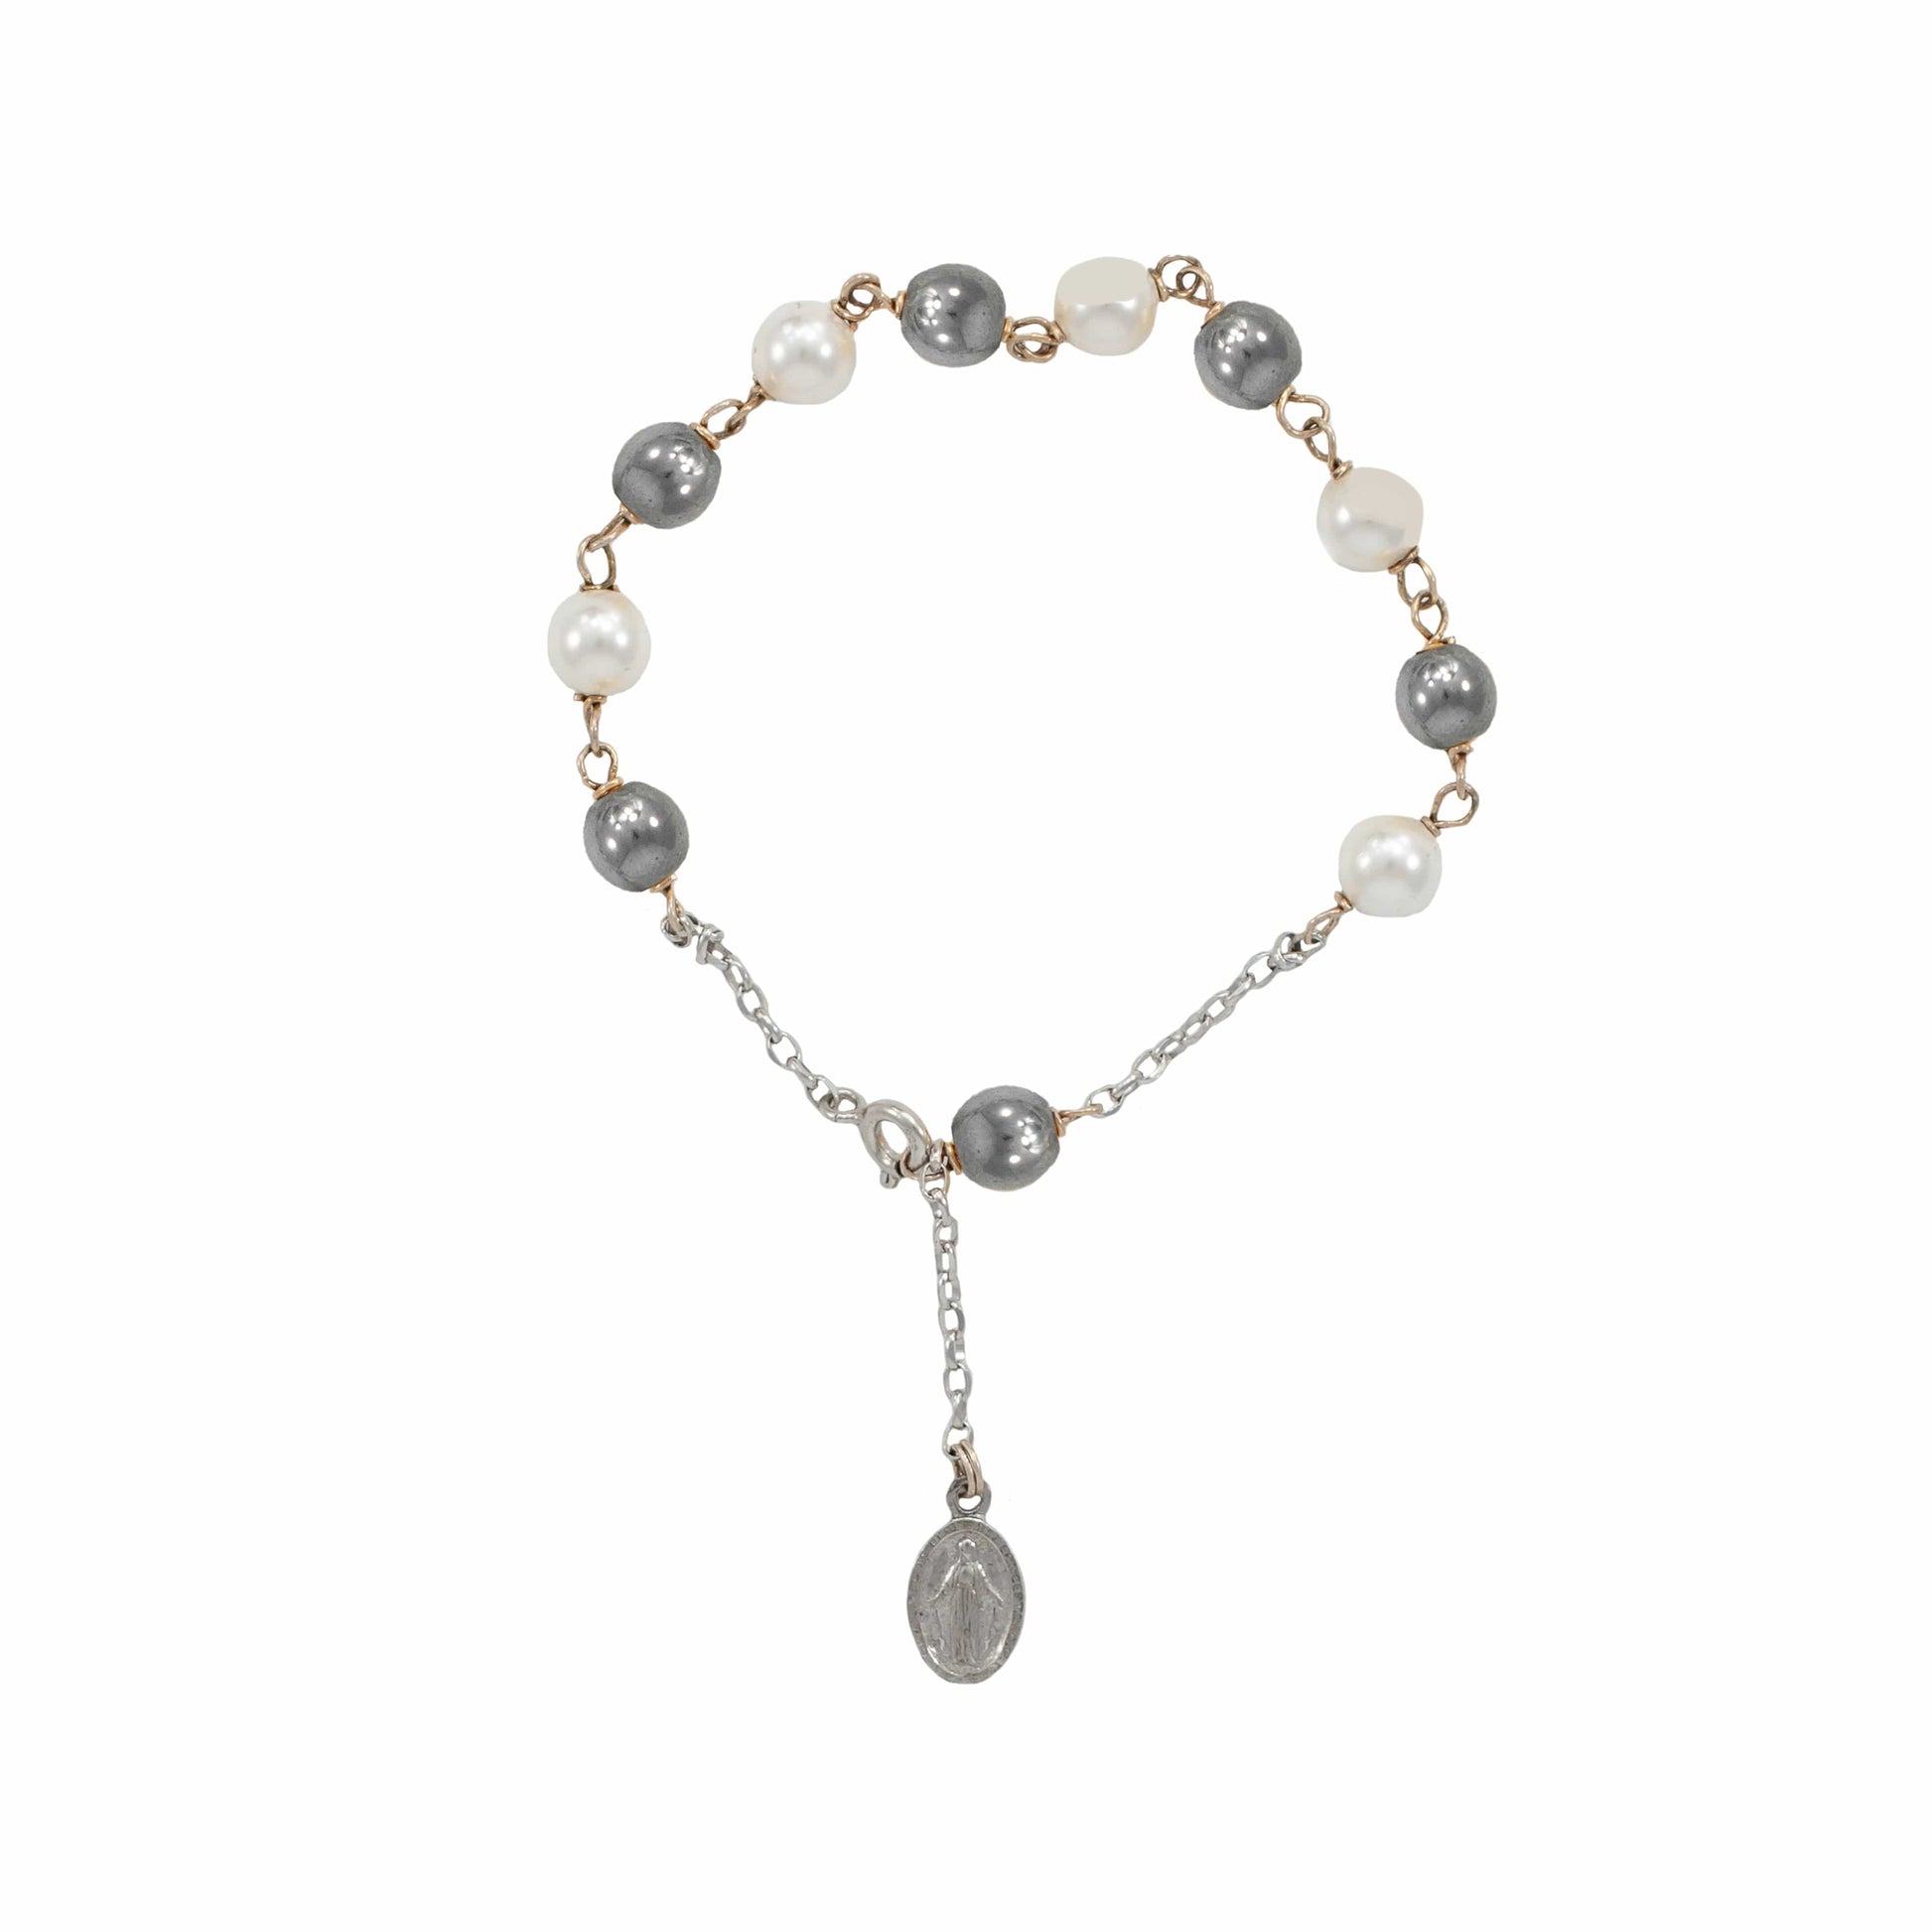 MONDO CATTOLICO Prayer Beads Adjustable Sterling Silver Rosary Bracelet Swarovski Crystal White Pearl and Hematite Beads